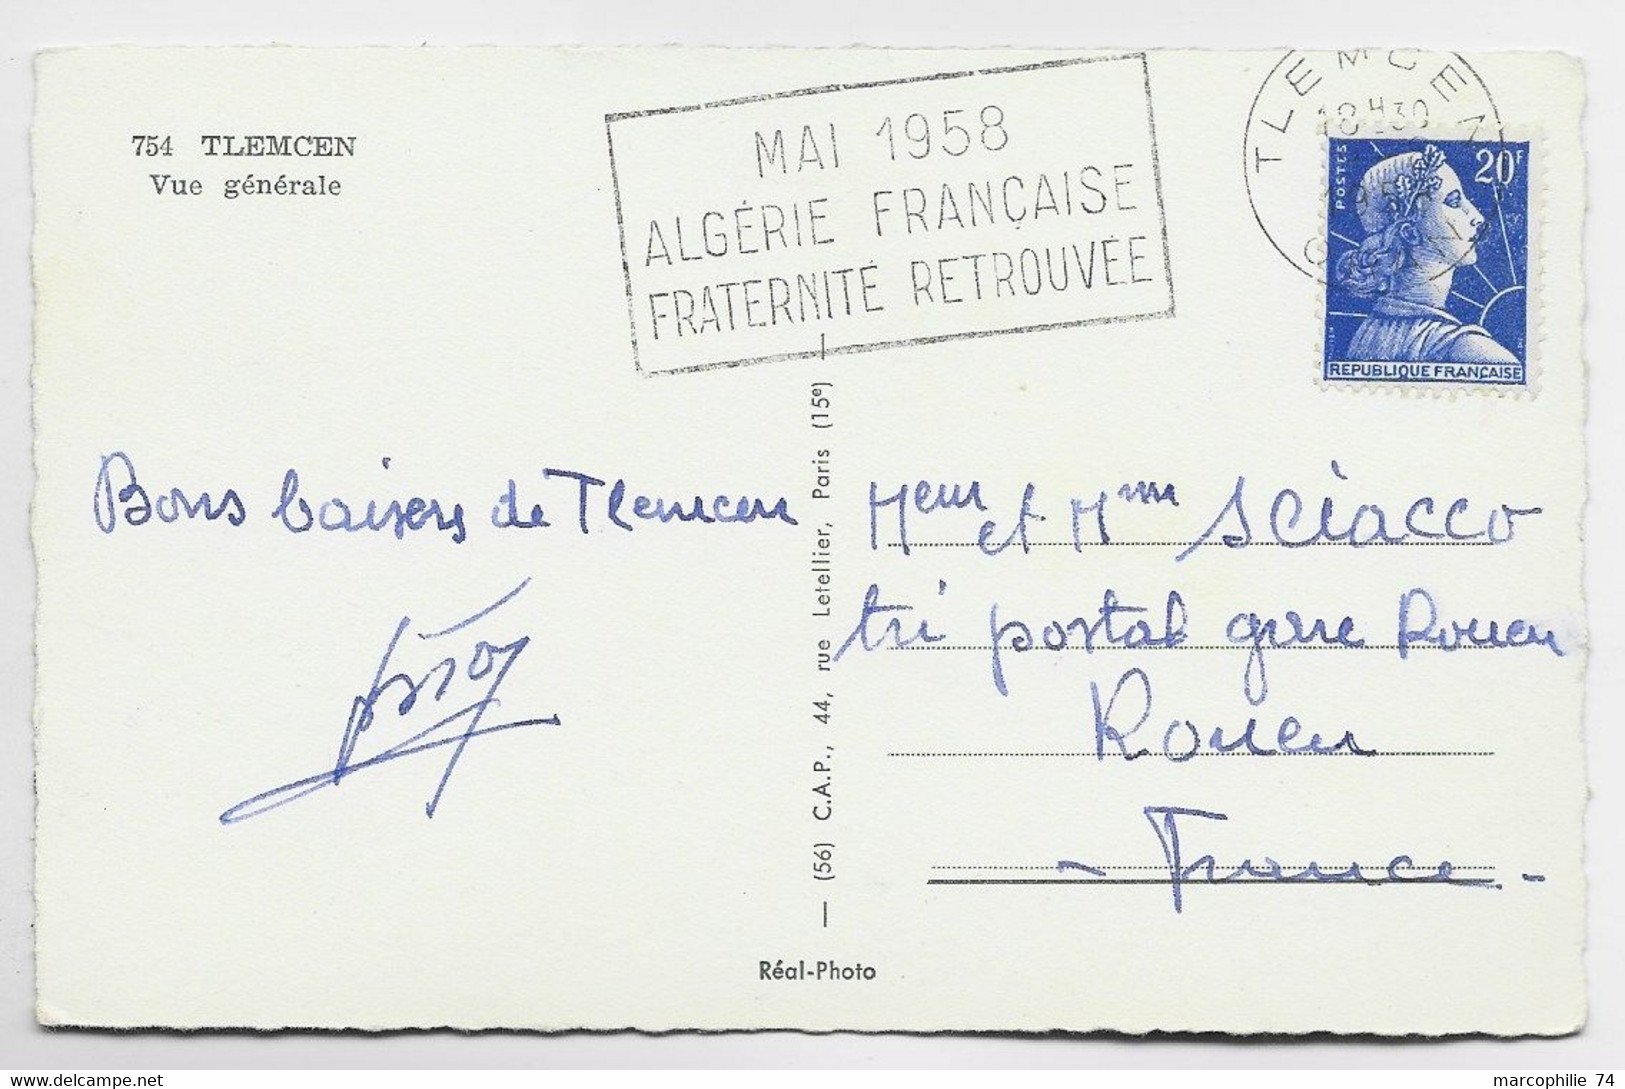 FRANCE MULLER 20FR CARTE MEC SECAP MAI 1958 ALGERIE FRANCAISE TLEMCEN 1958 ORAN - Lettres & Documents